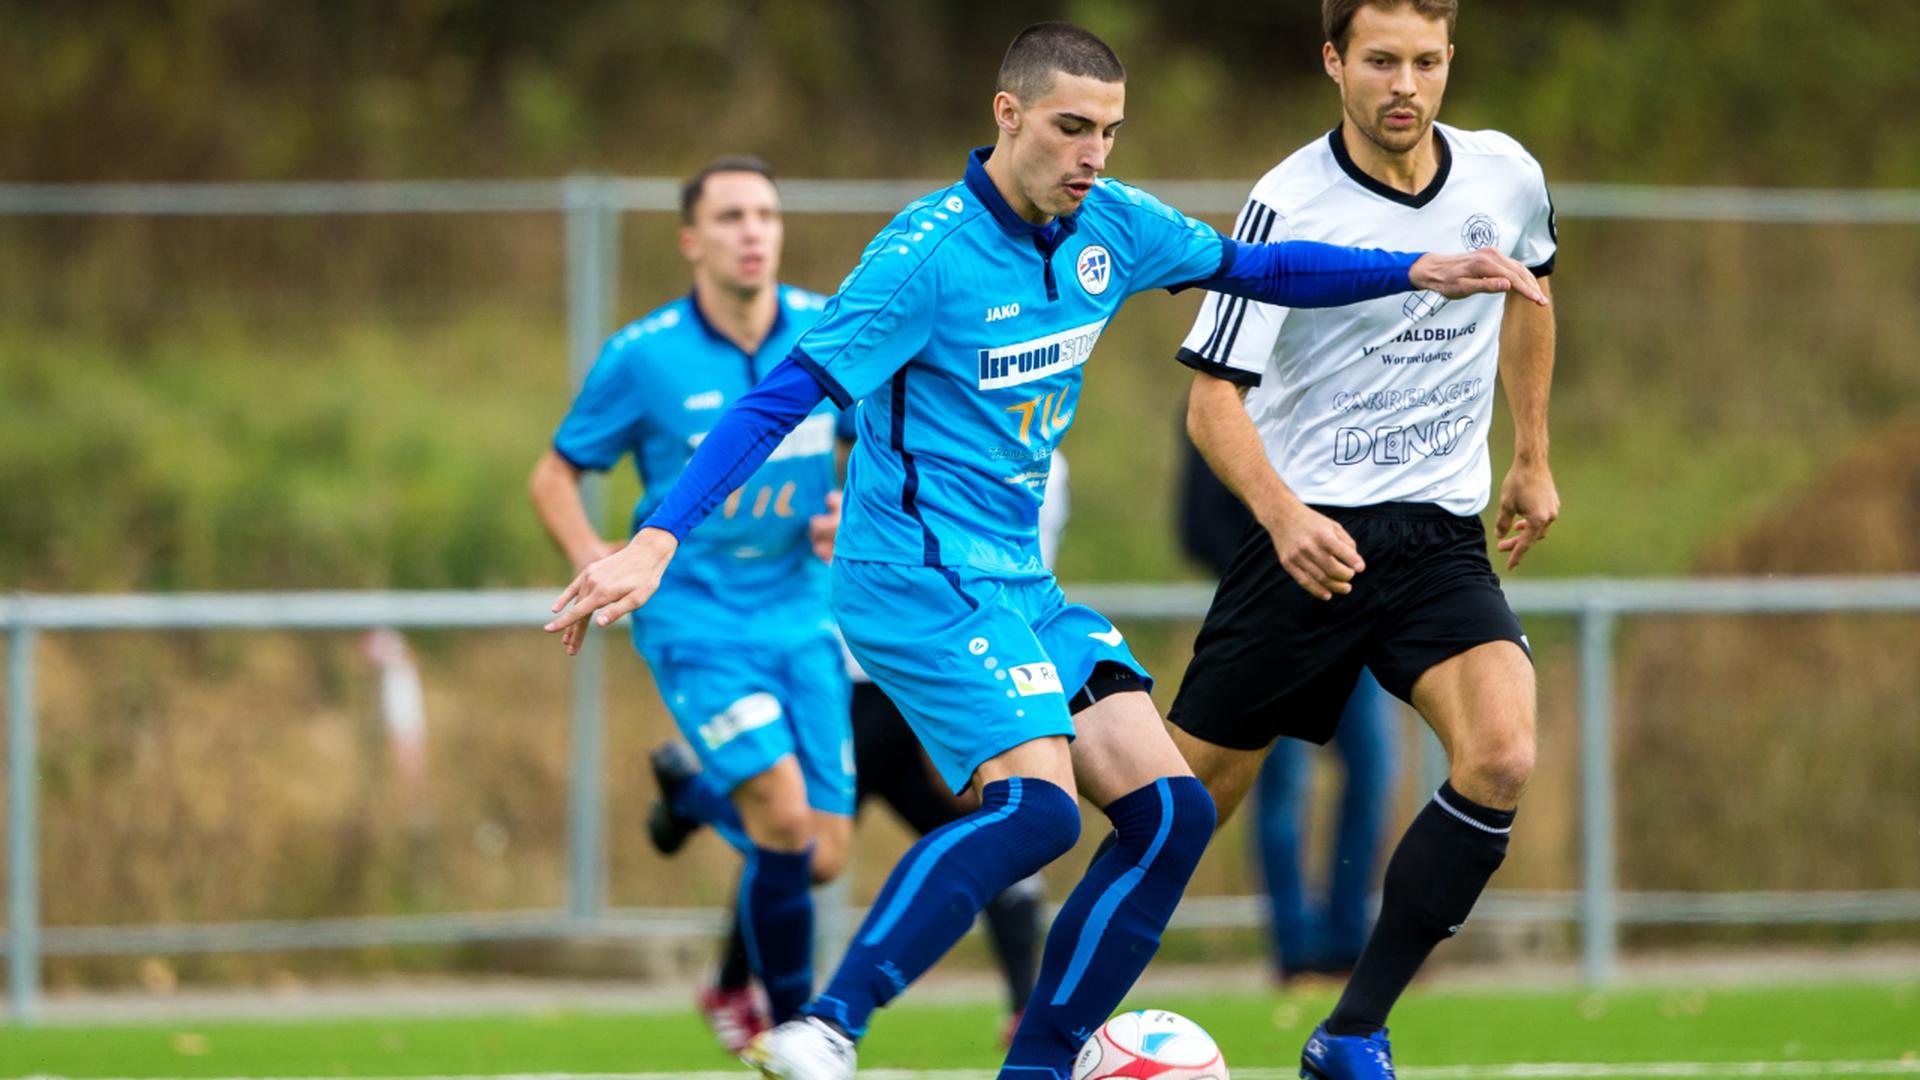 Sanem (en bleu) - Wormeldange 3-1 - Cédric Gorjao Camarate et Michal Jerzy Mroch.